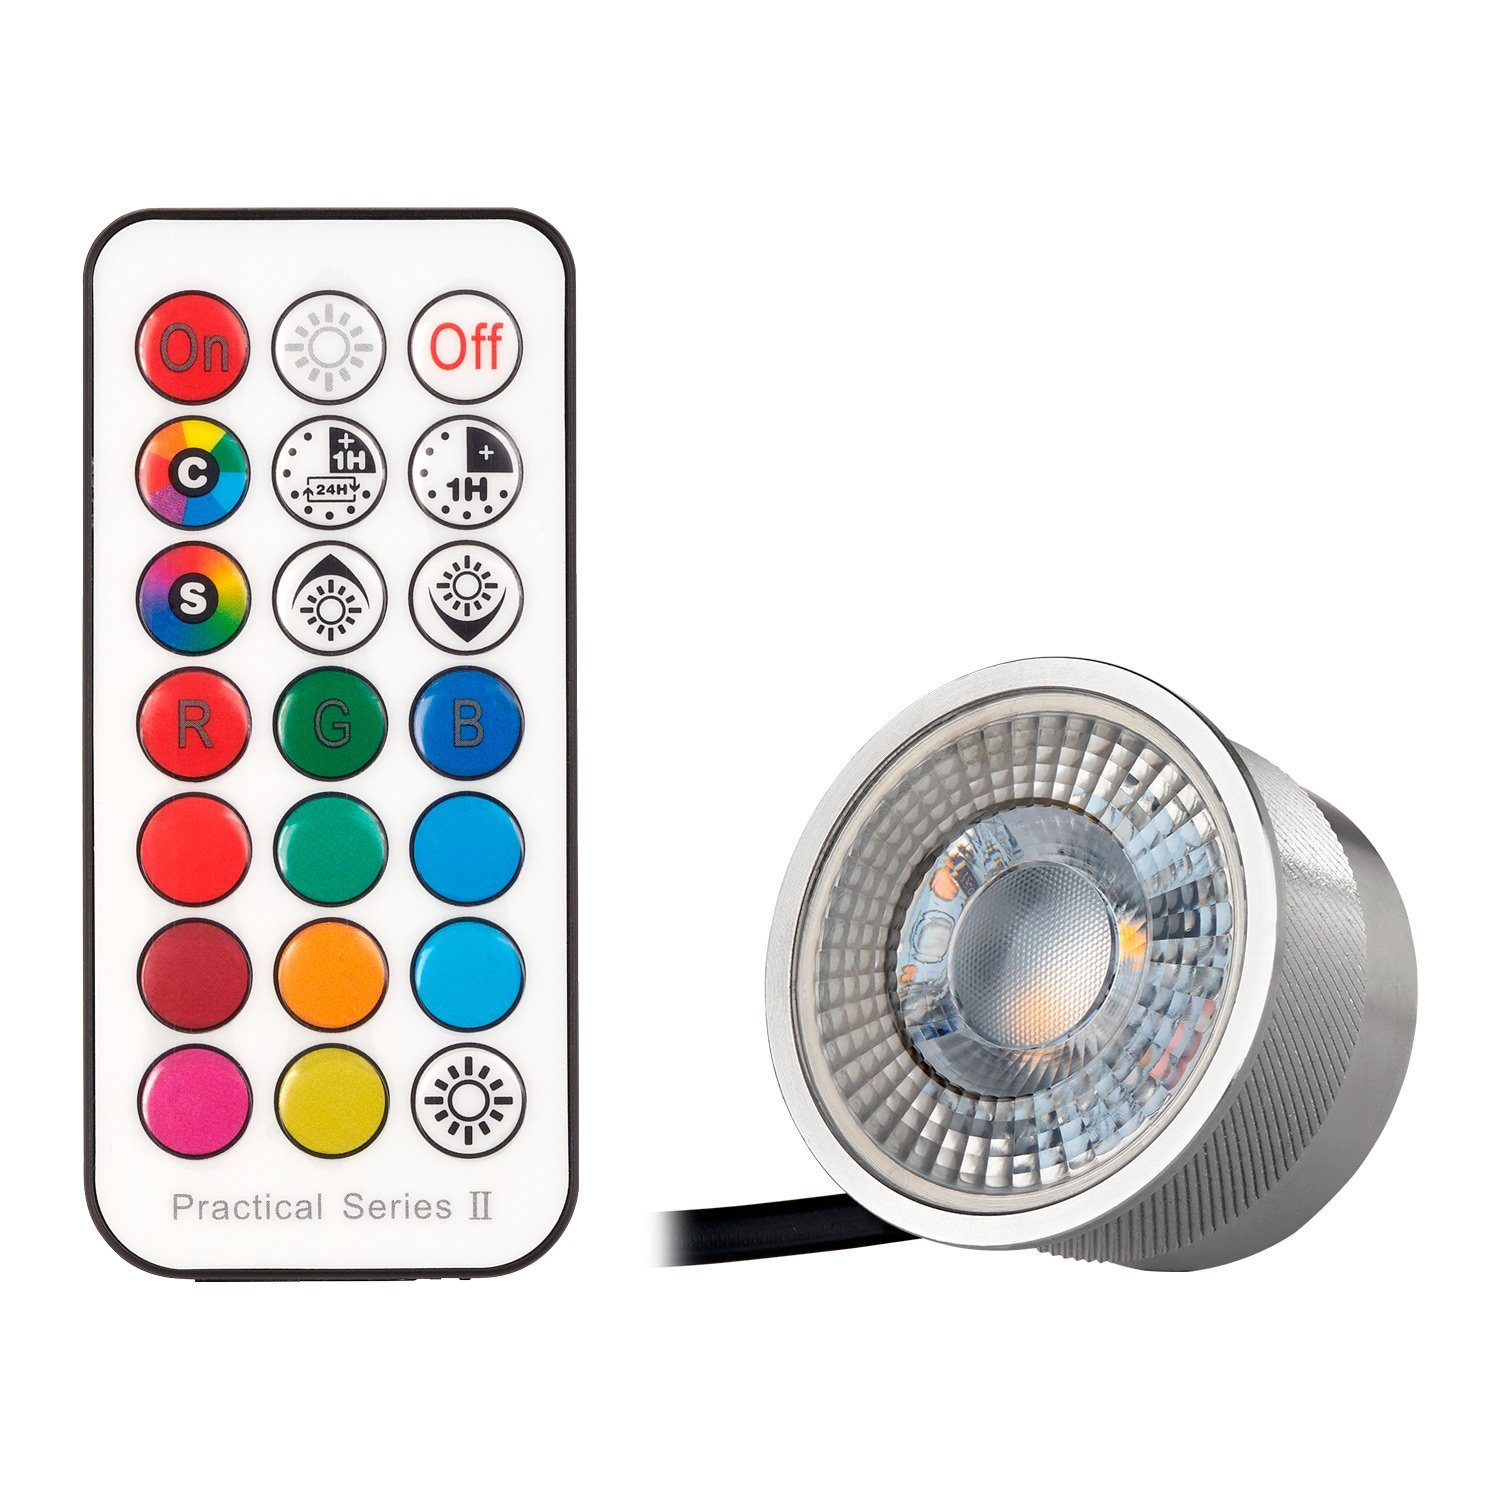 LEDANDO LED Einbaustrahler 10er RGB Set extra gebürstet silber flach mit 3W LED Einbaustrahler in